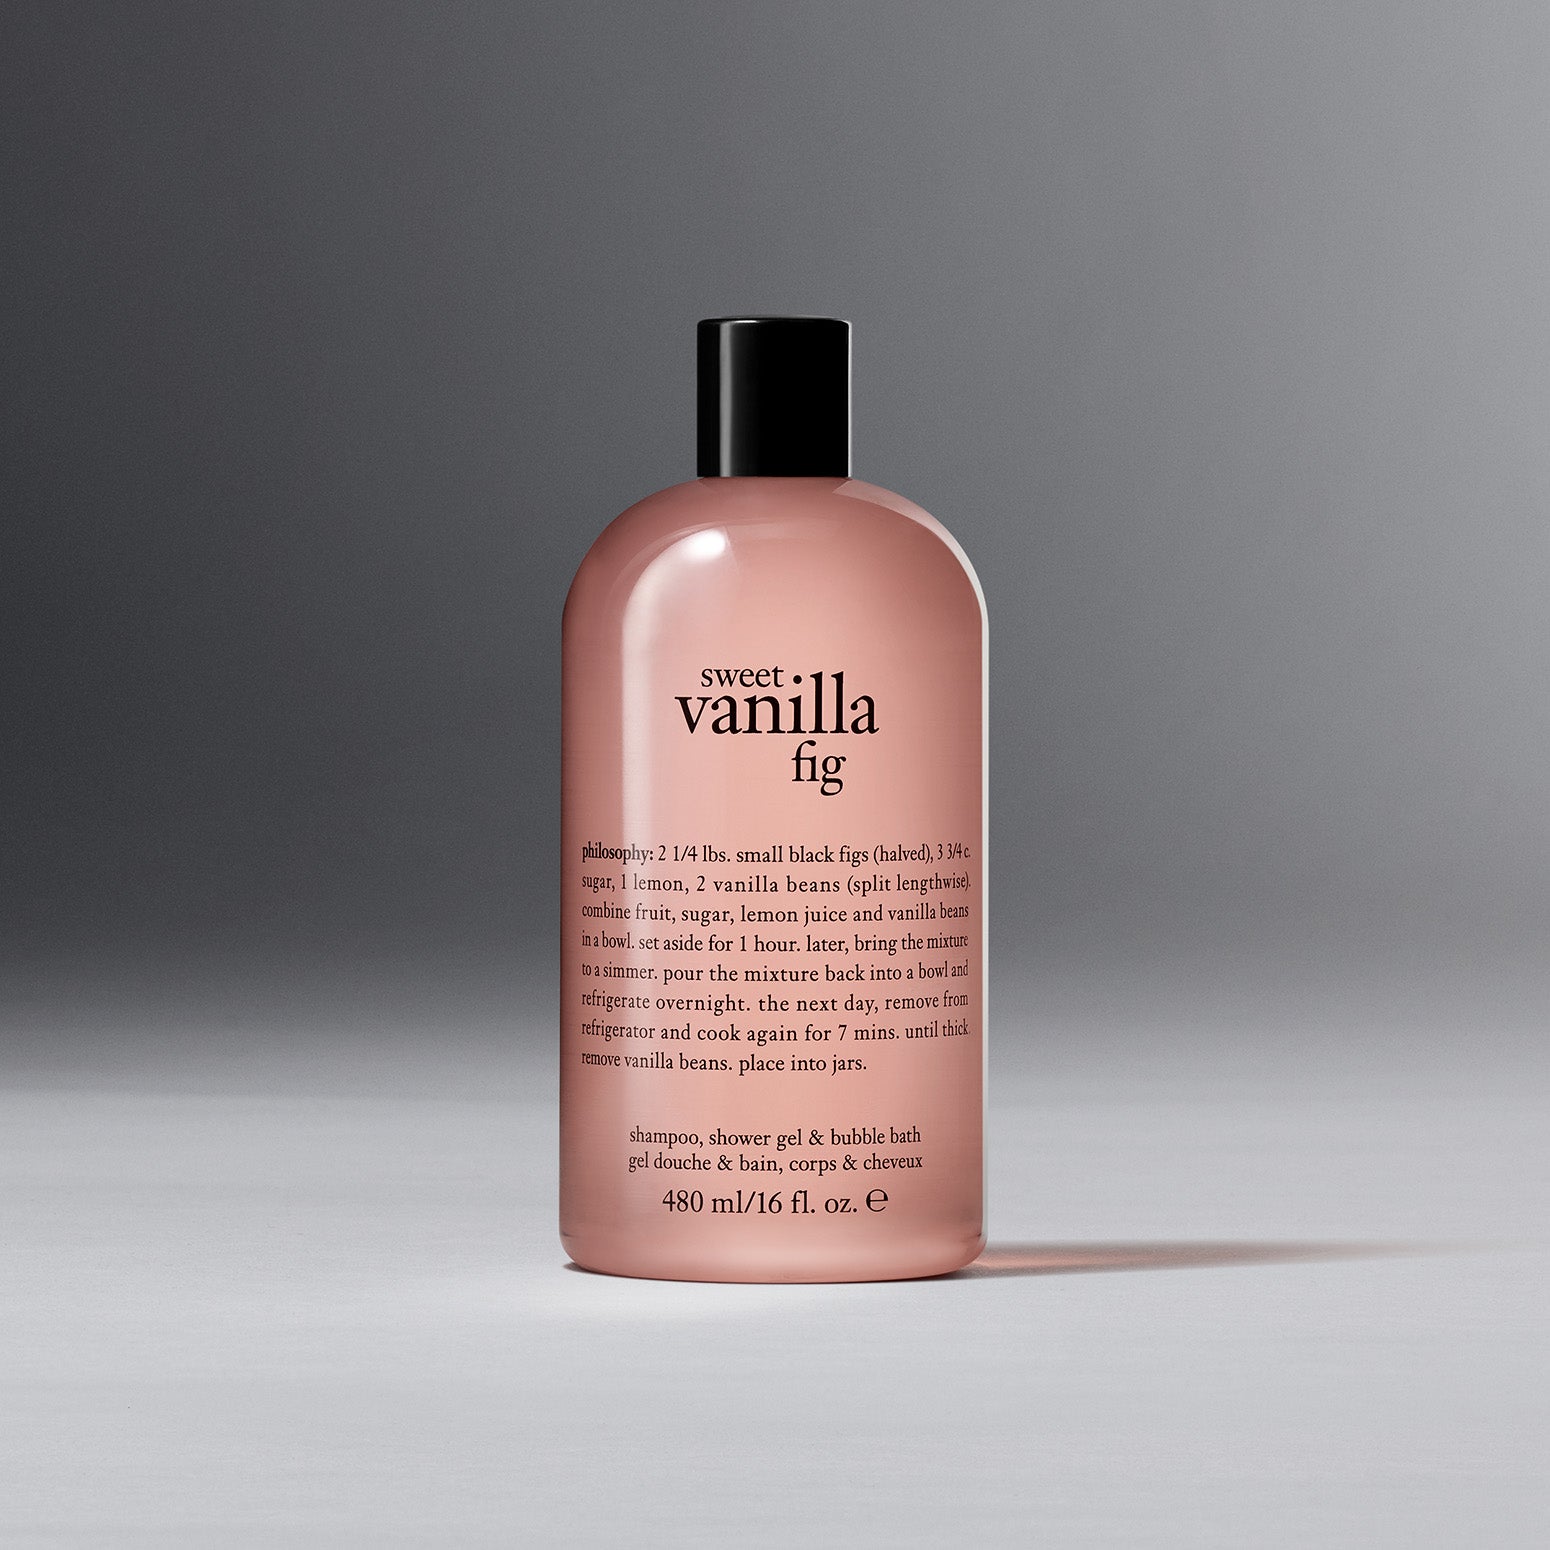 sweet vanilla fig shampoo, shower gel & bubble bath